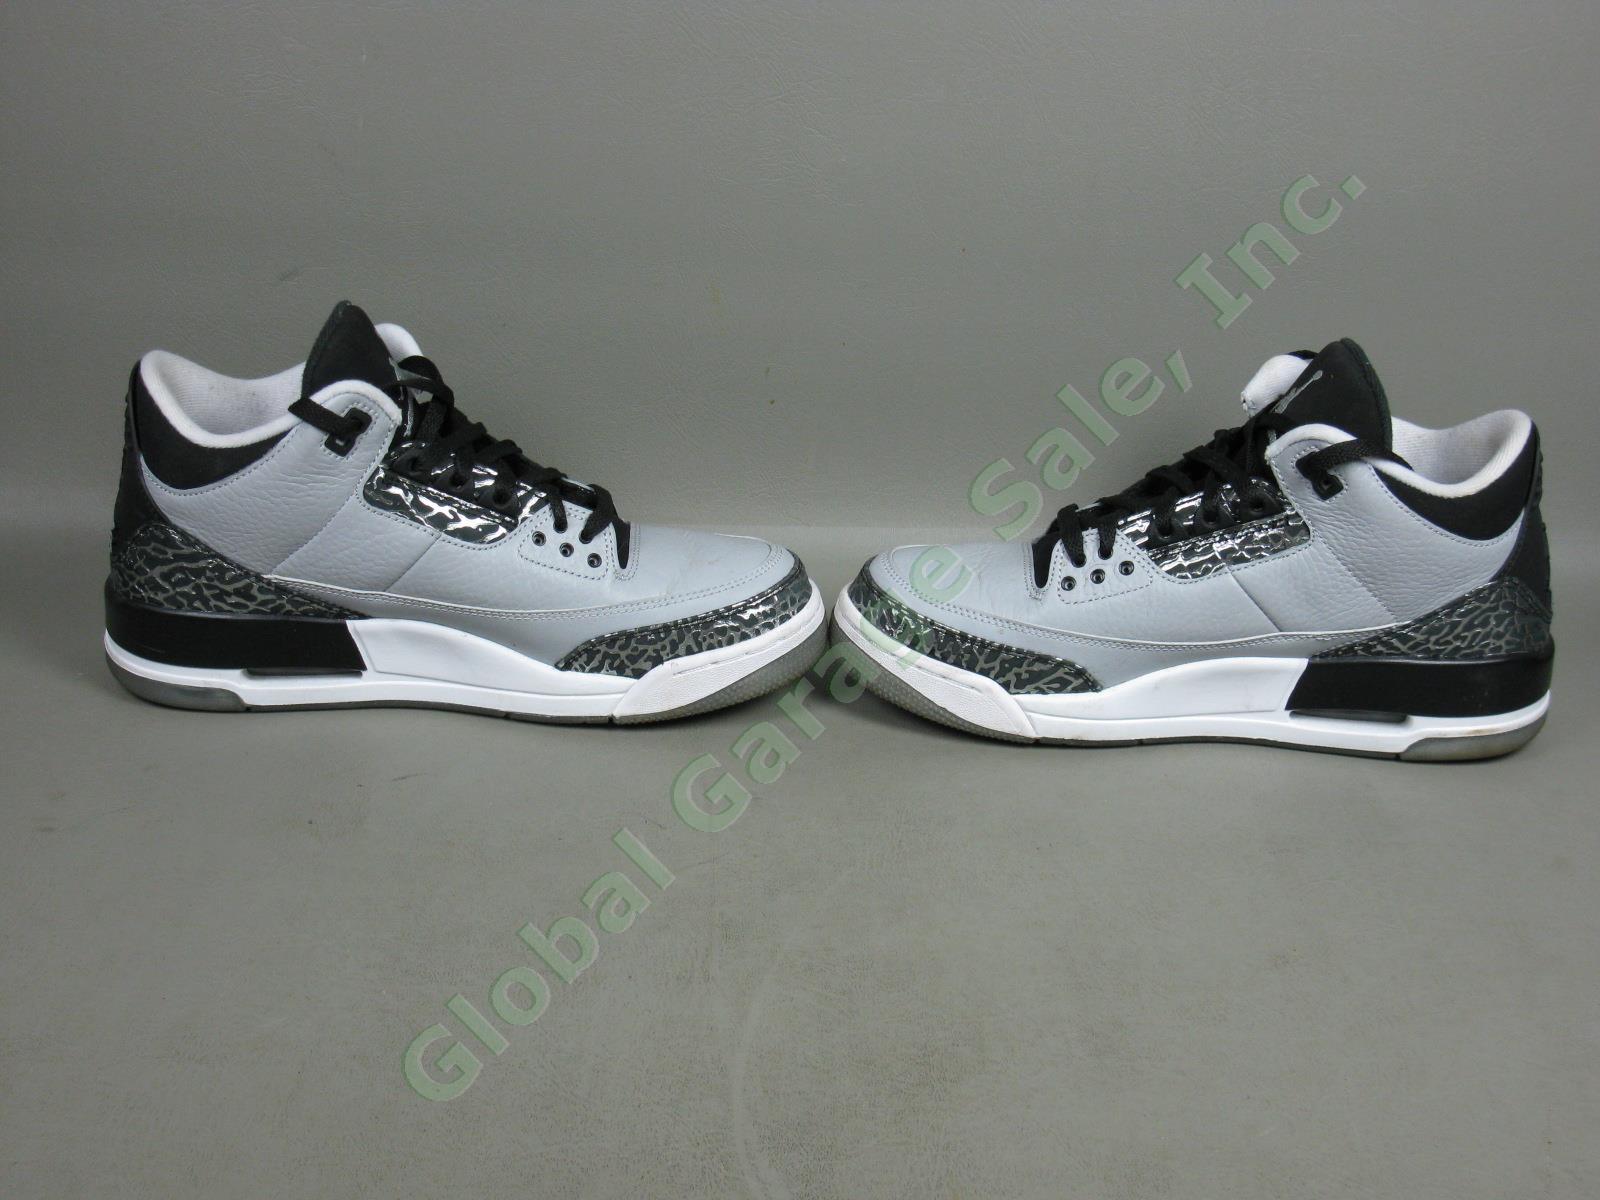 Nike Air Jordan 3 Retro Wolf Grey Basketball Shoes Size US 9 EUR 42.5 136064-004 3